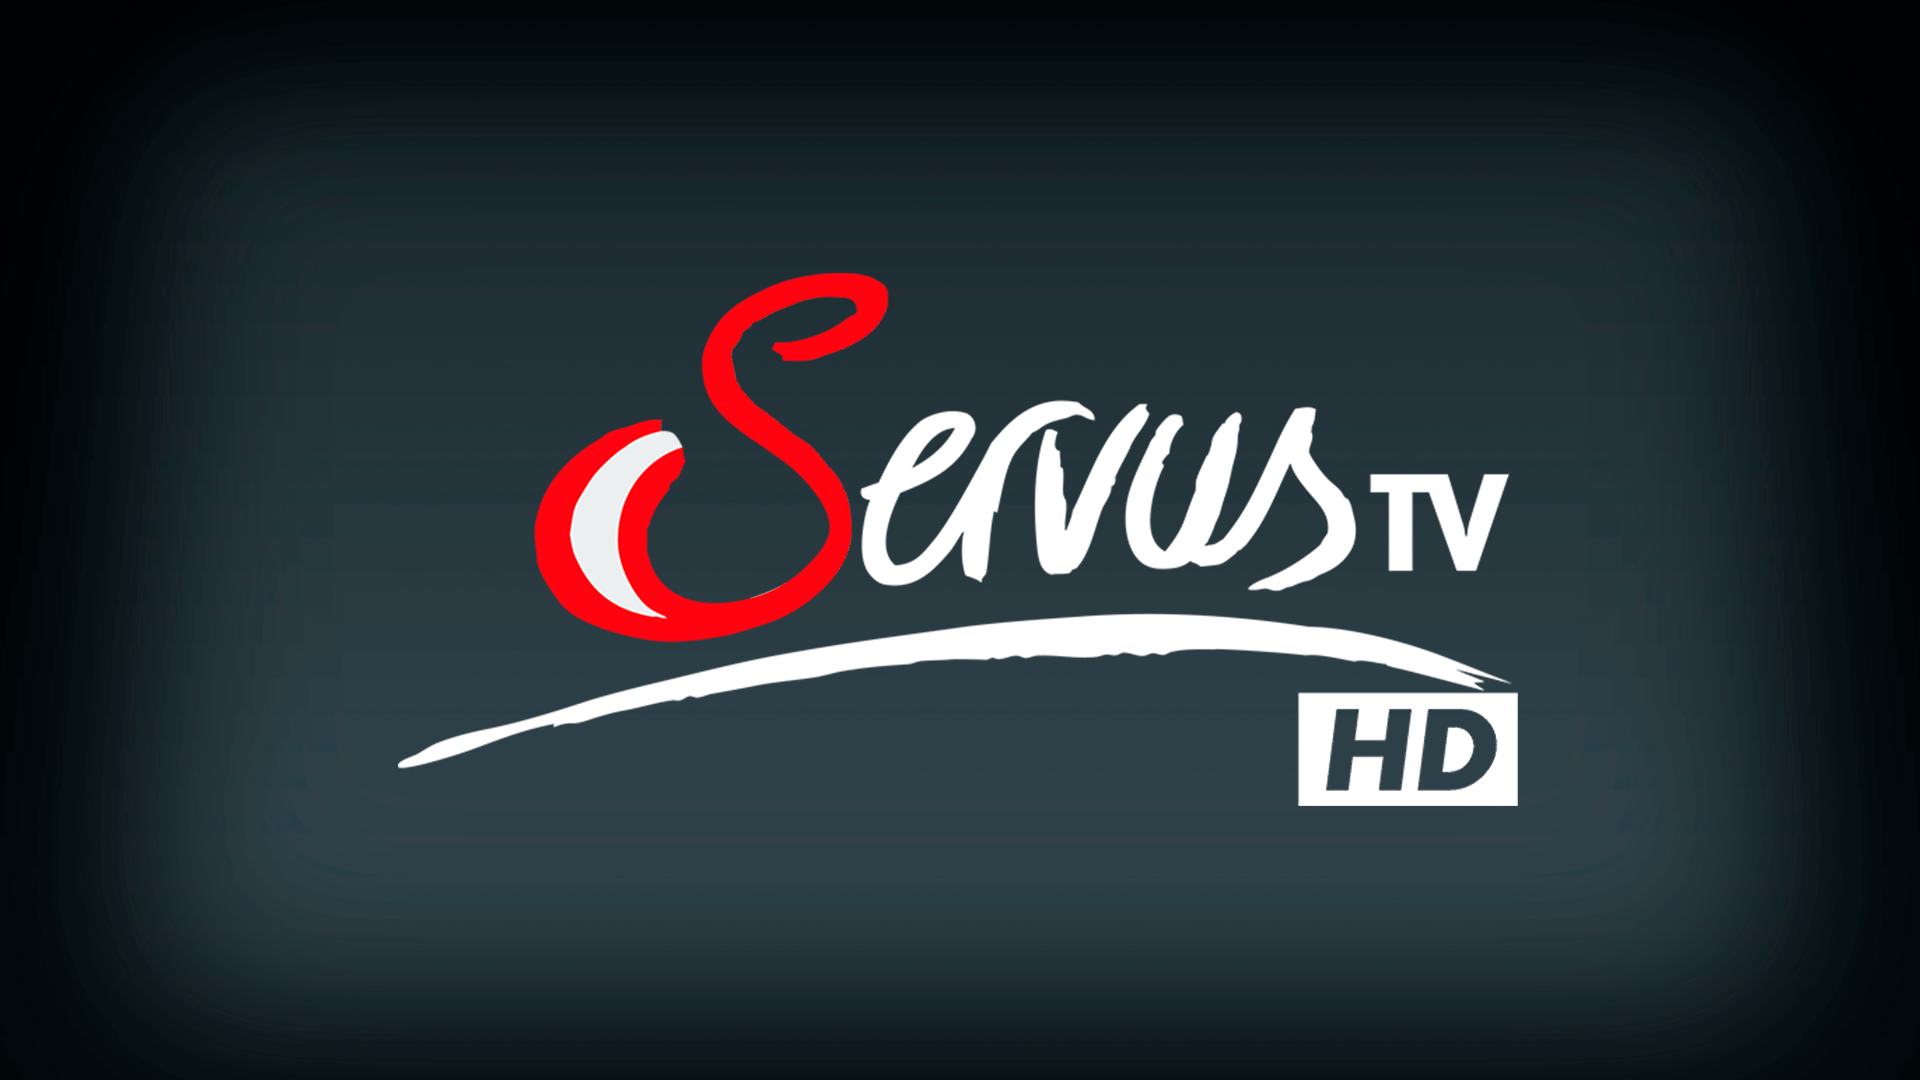 Servus HD